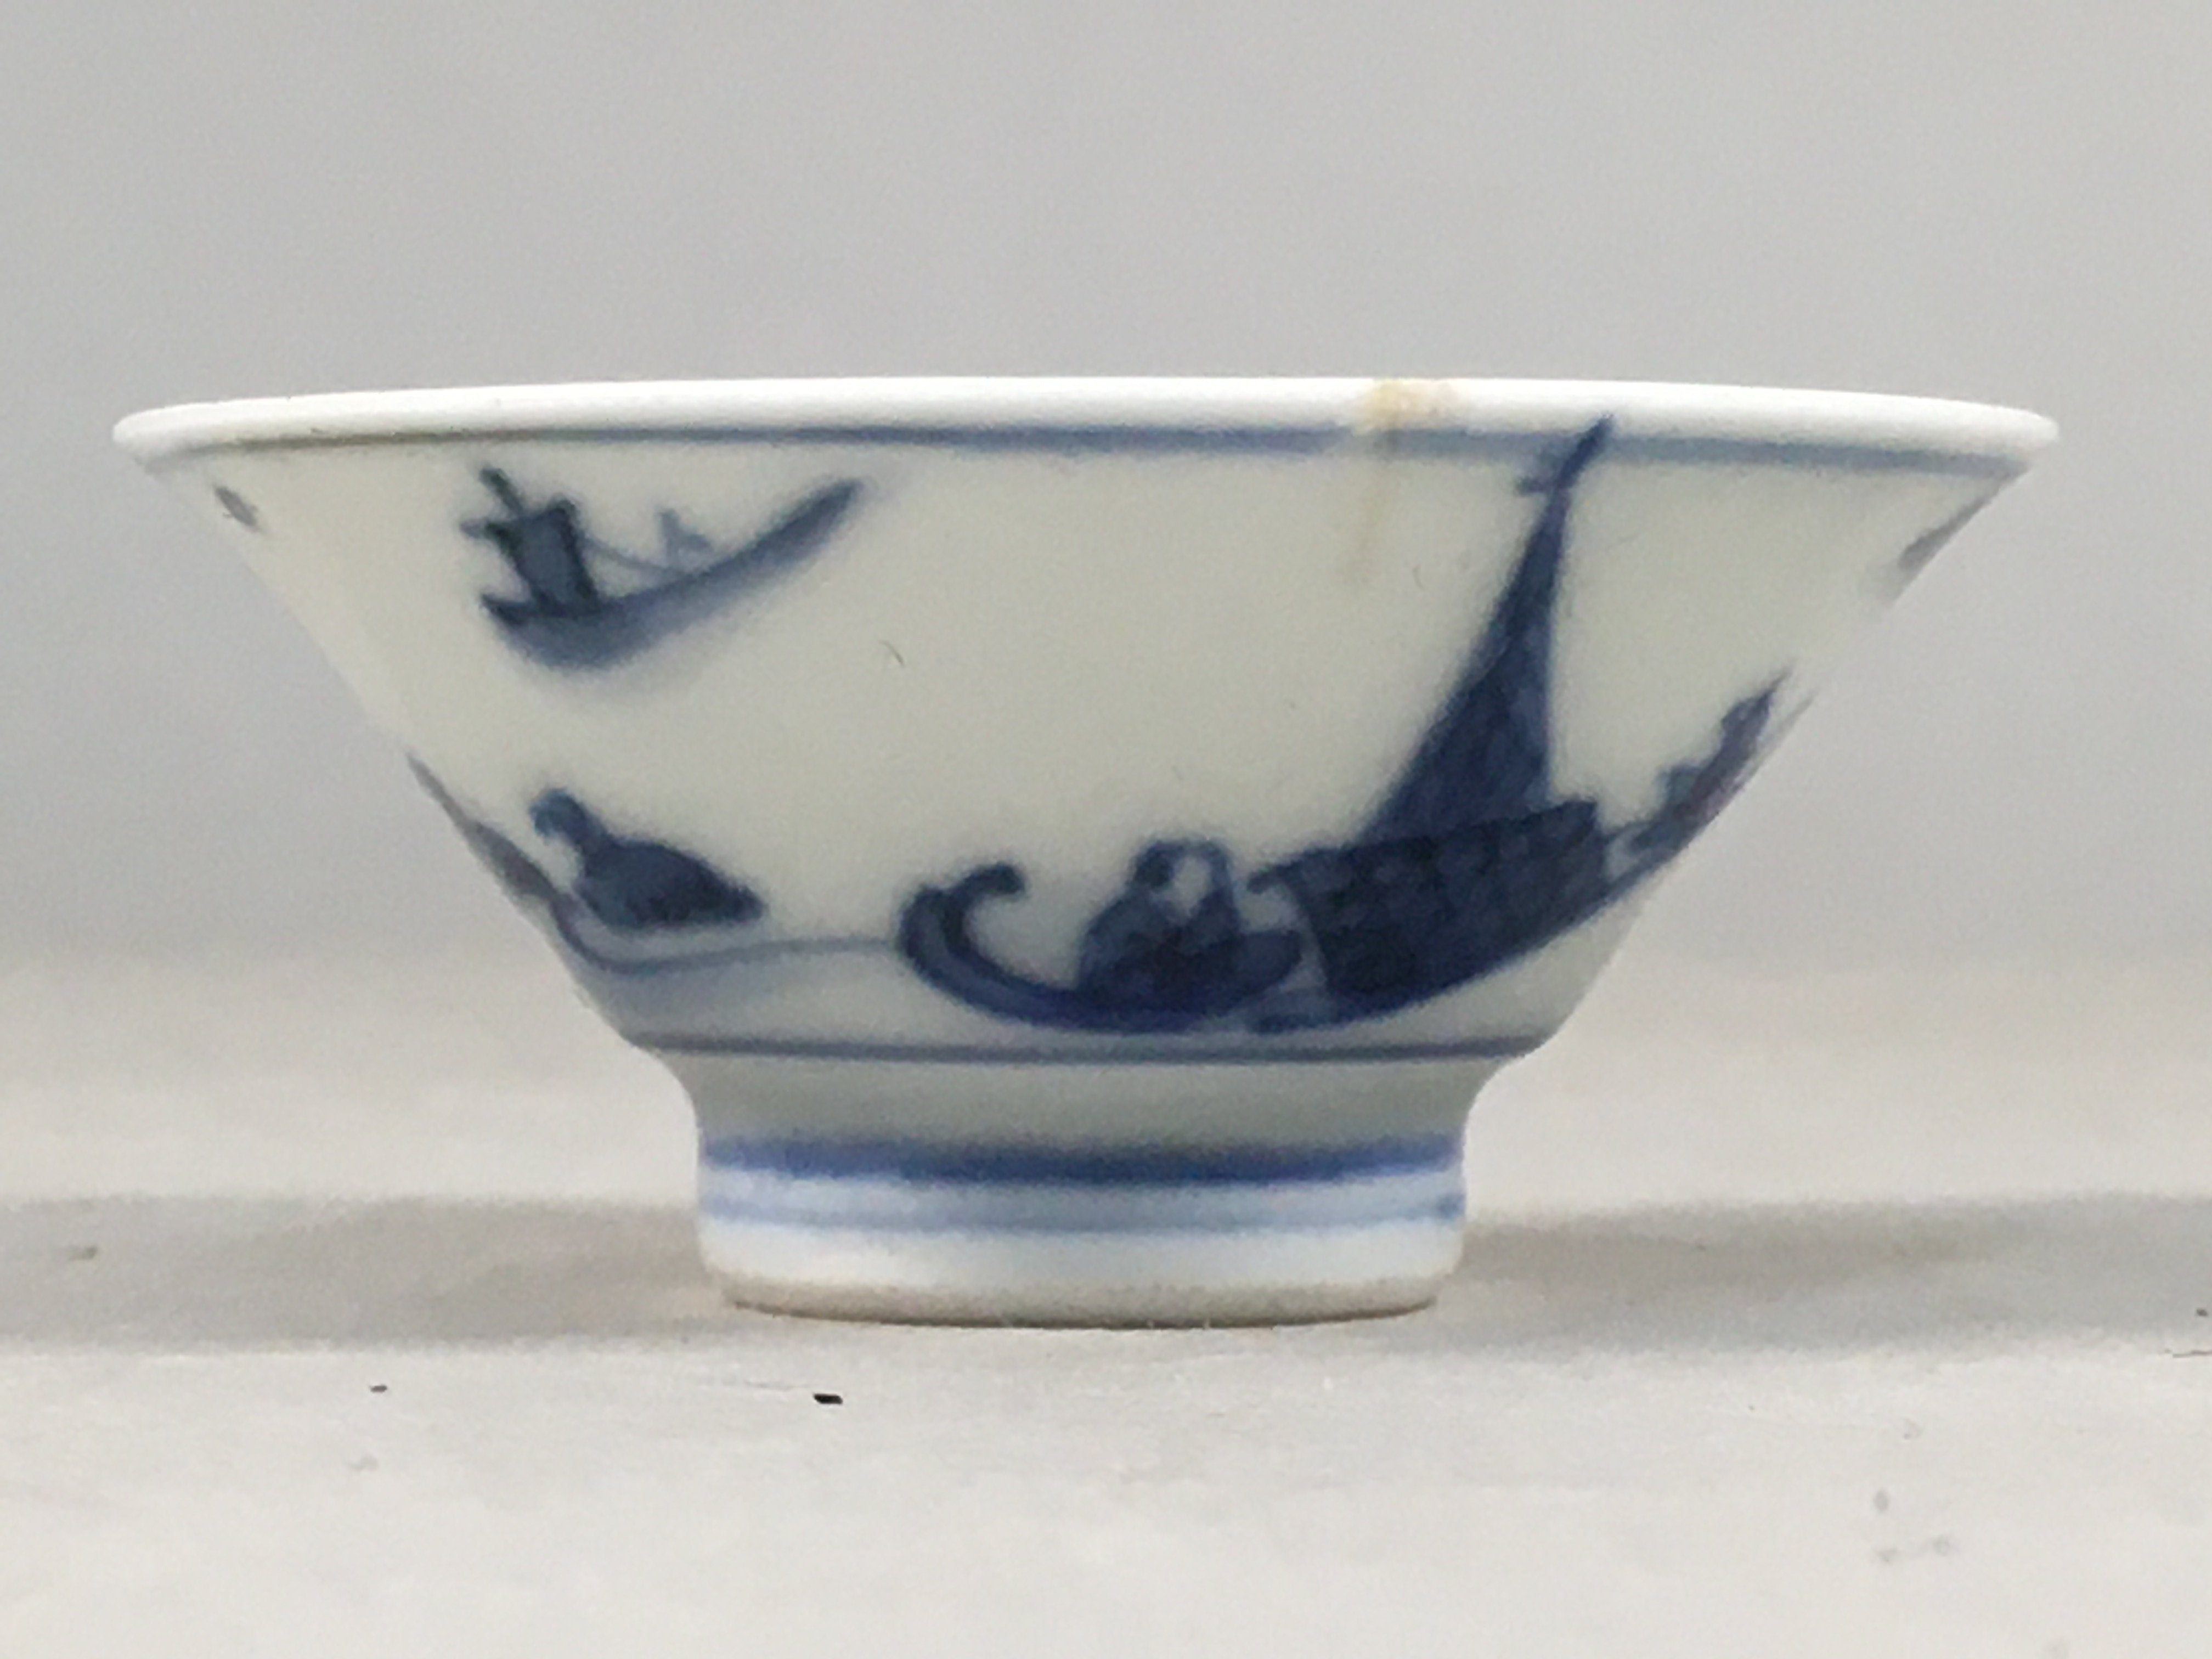 Japanese Porcelain Sake Cup Guinomi Sakazuki Vtg Blue White Sometsuke GU810